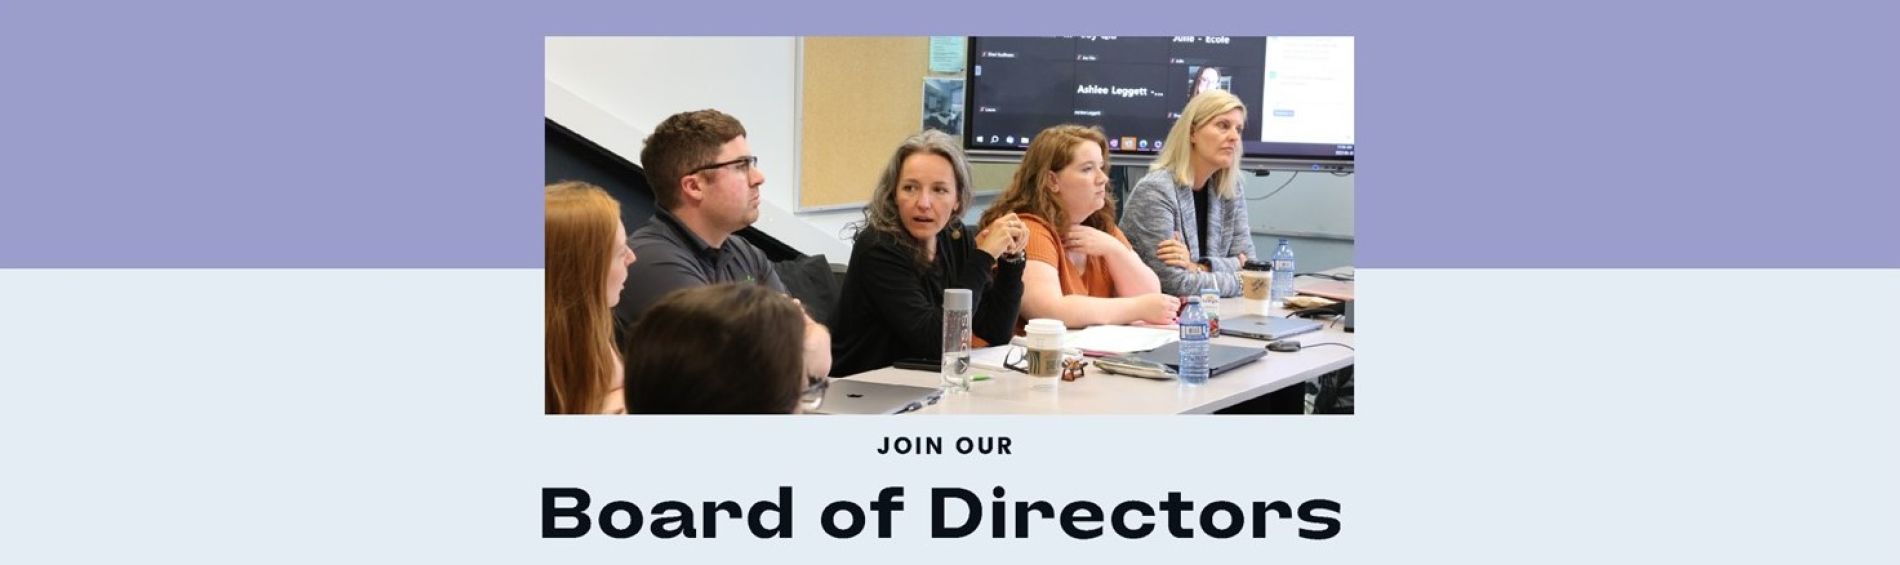 Board of Directors Recruitment